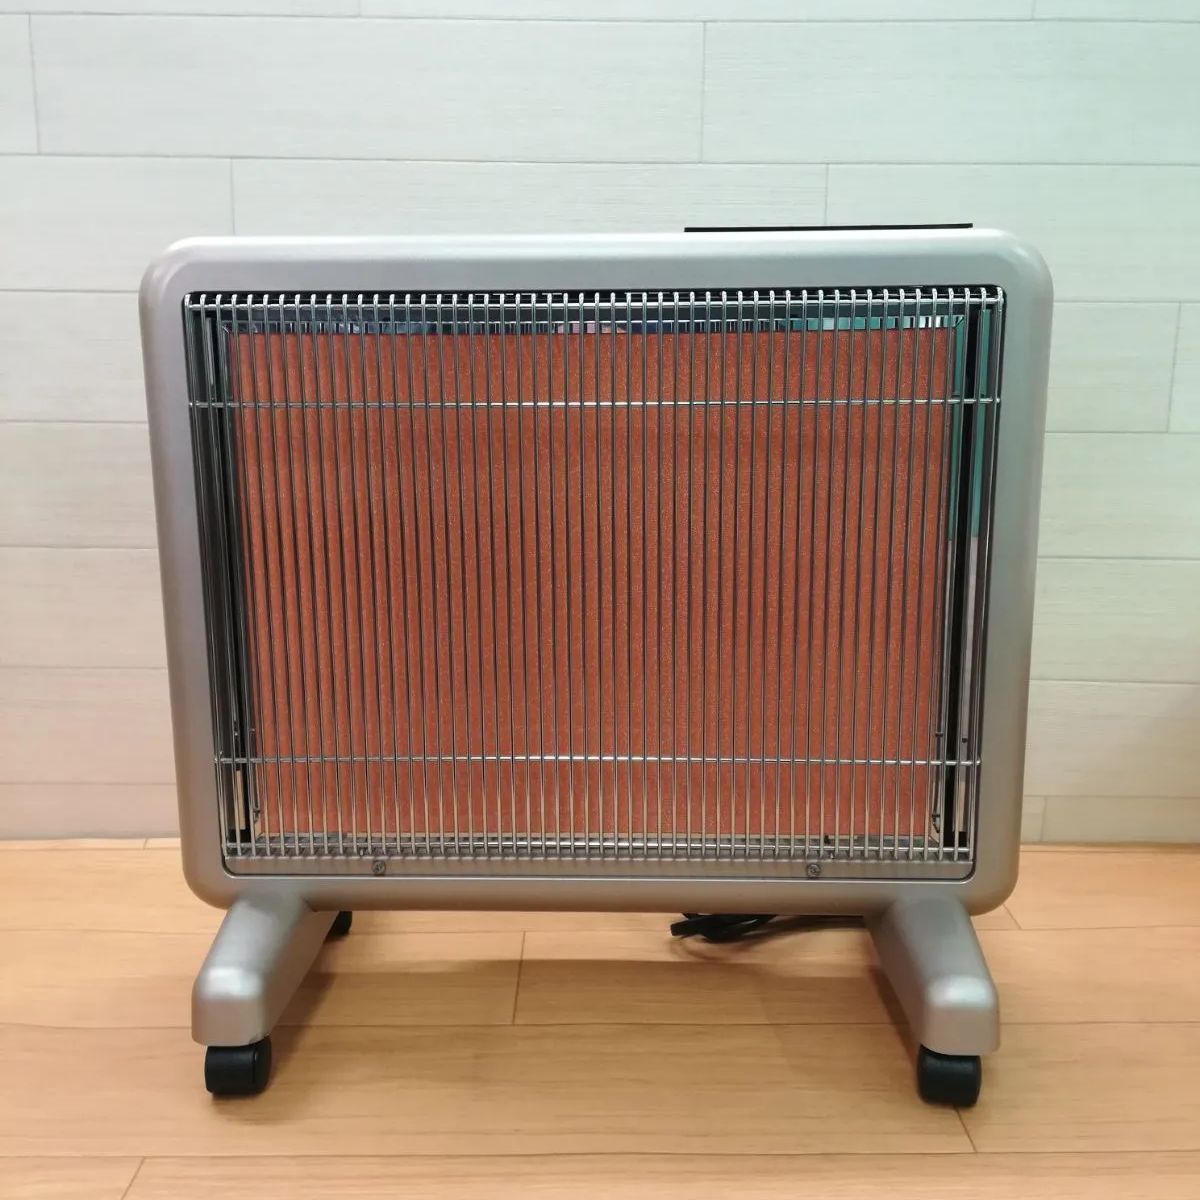 SunLumie サンルミエ N750L-GR エクセラ750 遠赤外線暖房器 - 電気ヒーター